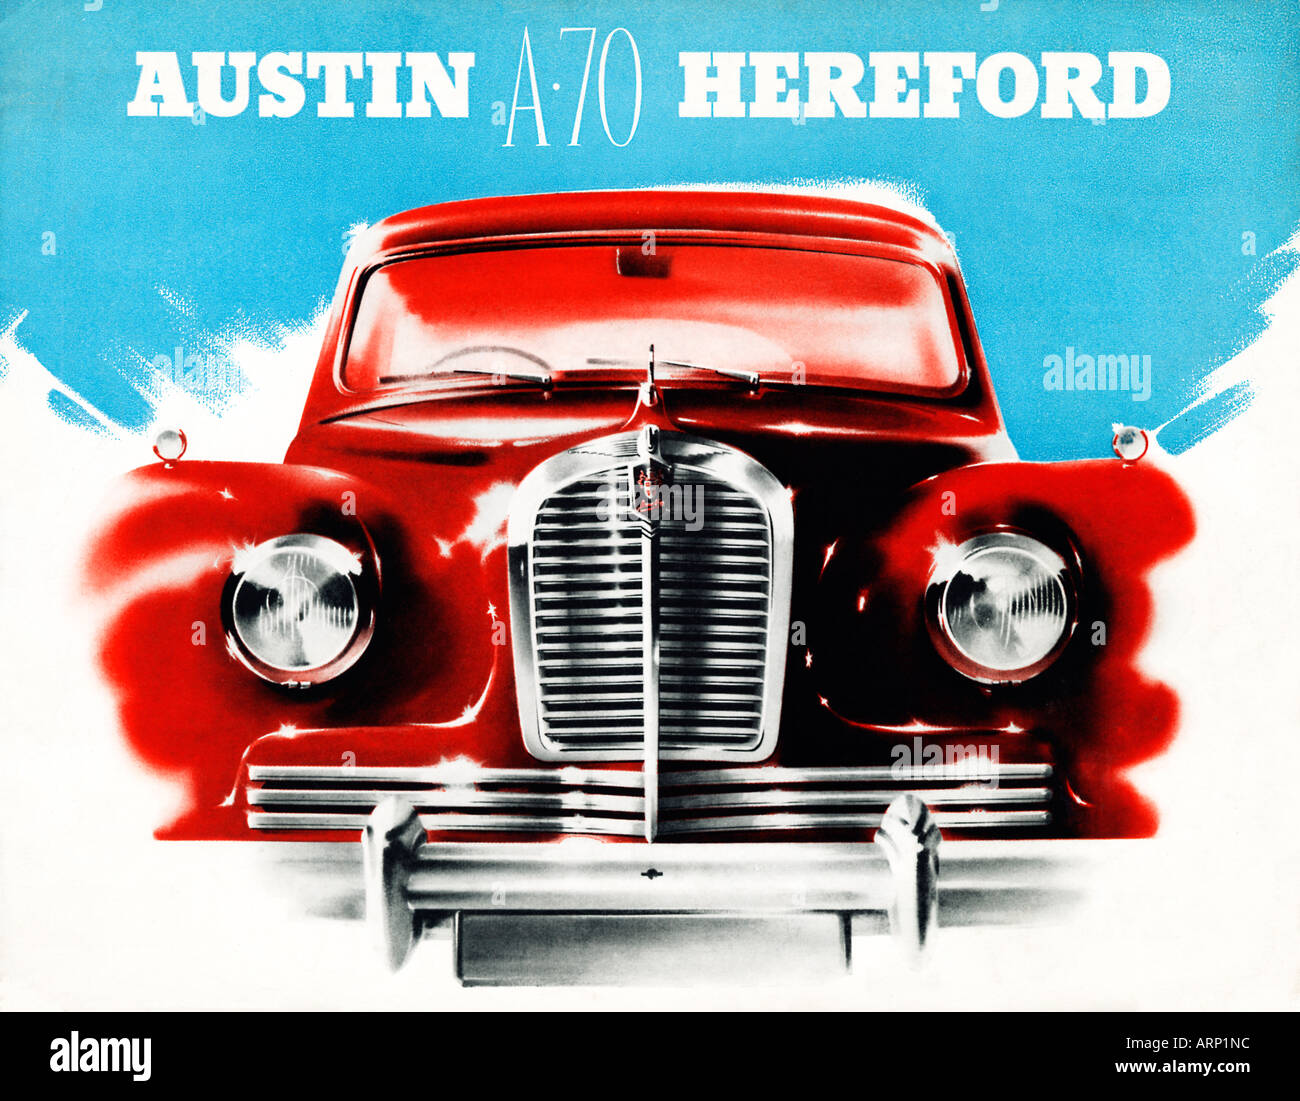 Austin A70 berlina Hereford 1940s brochure per la vettura inglese Foto Stock